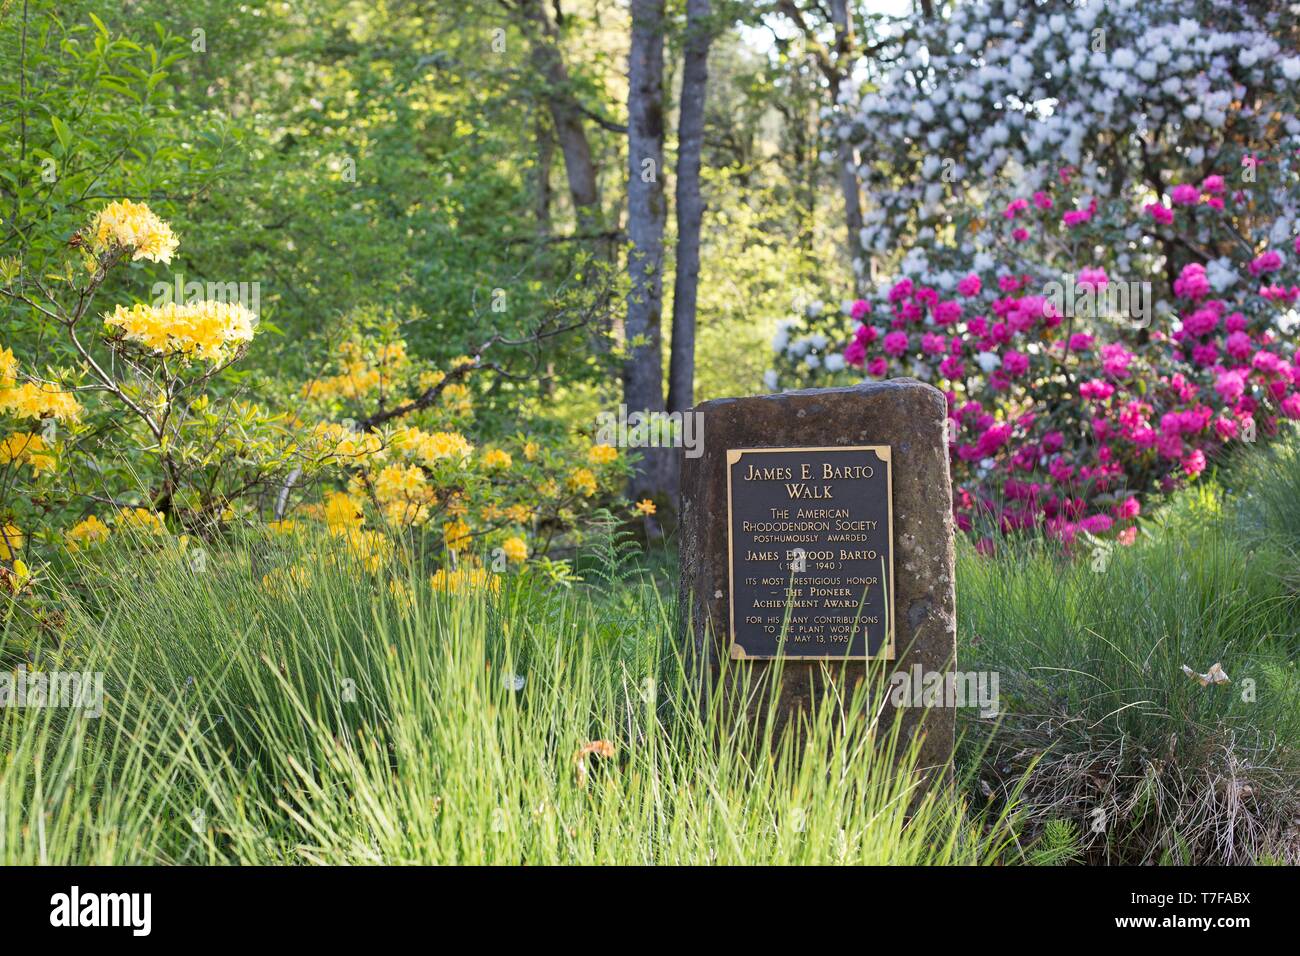 A sign for the James E. Barto walk at the Rhododendron Garden at Hendricks park in Eugene, Oregon, USA. Stock Photo